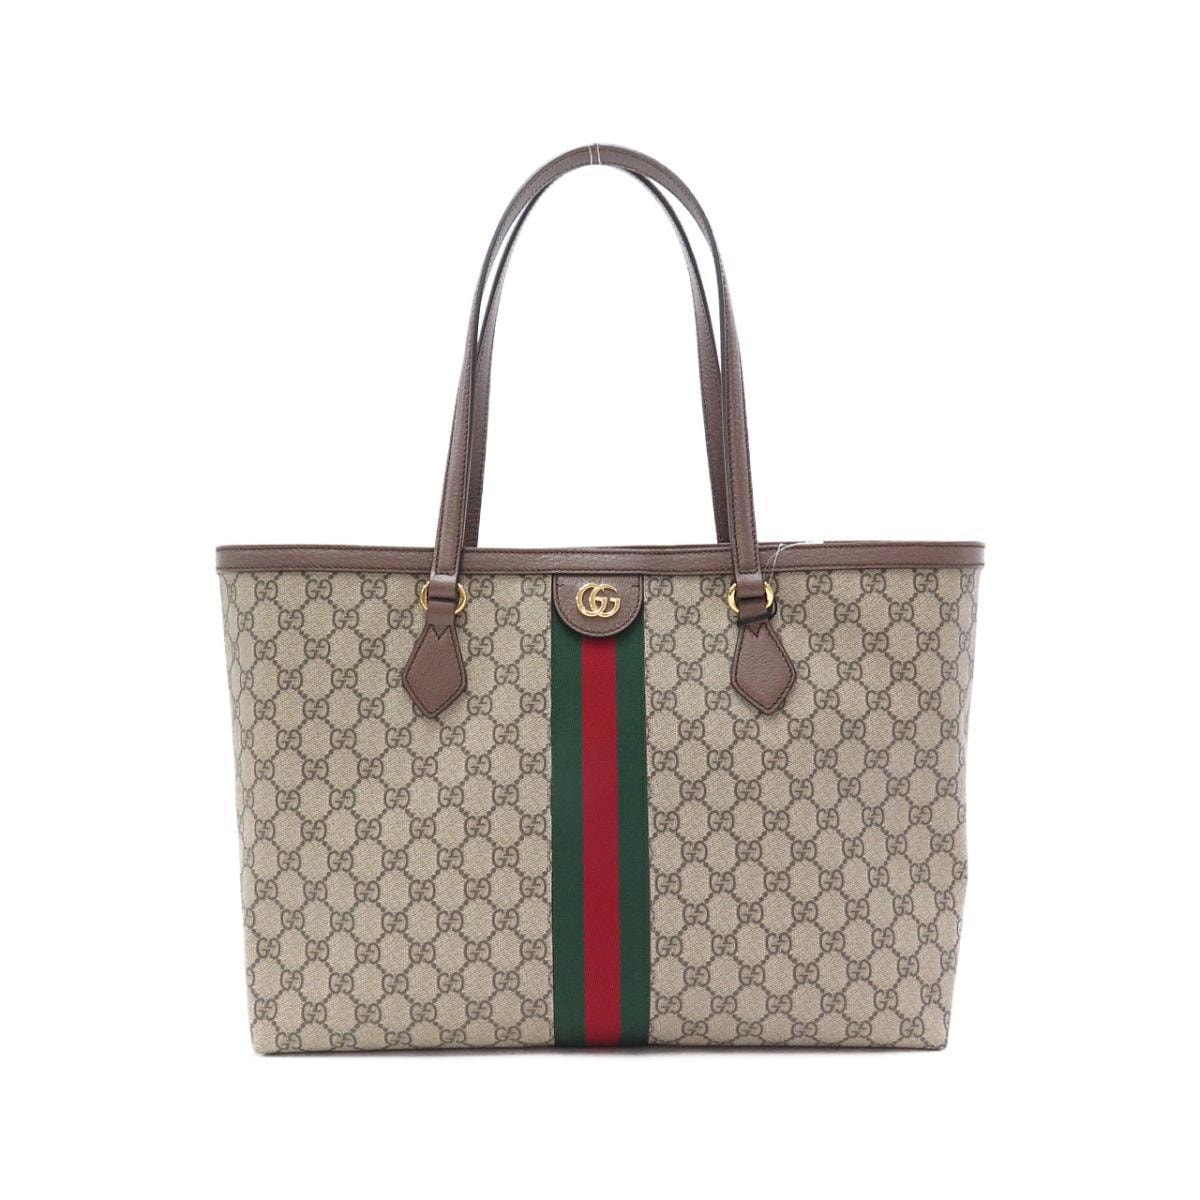 [BRAND NEW] Gucci bag 631685 96IWB